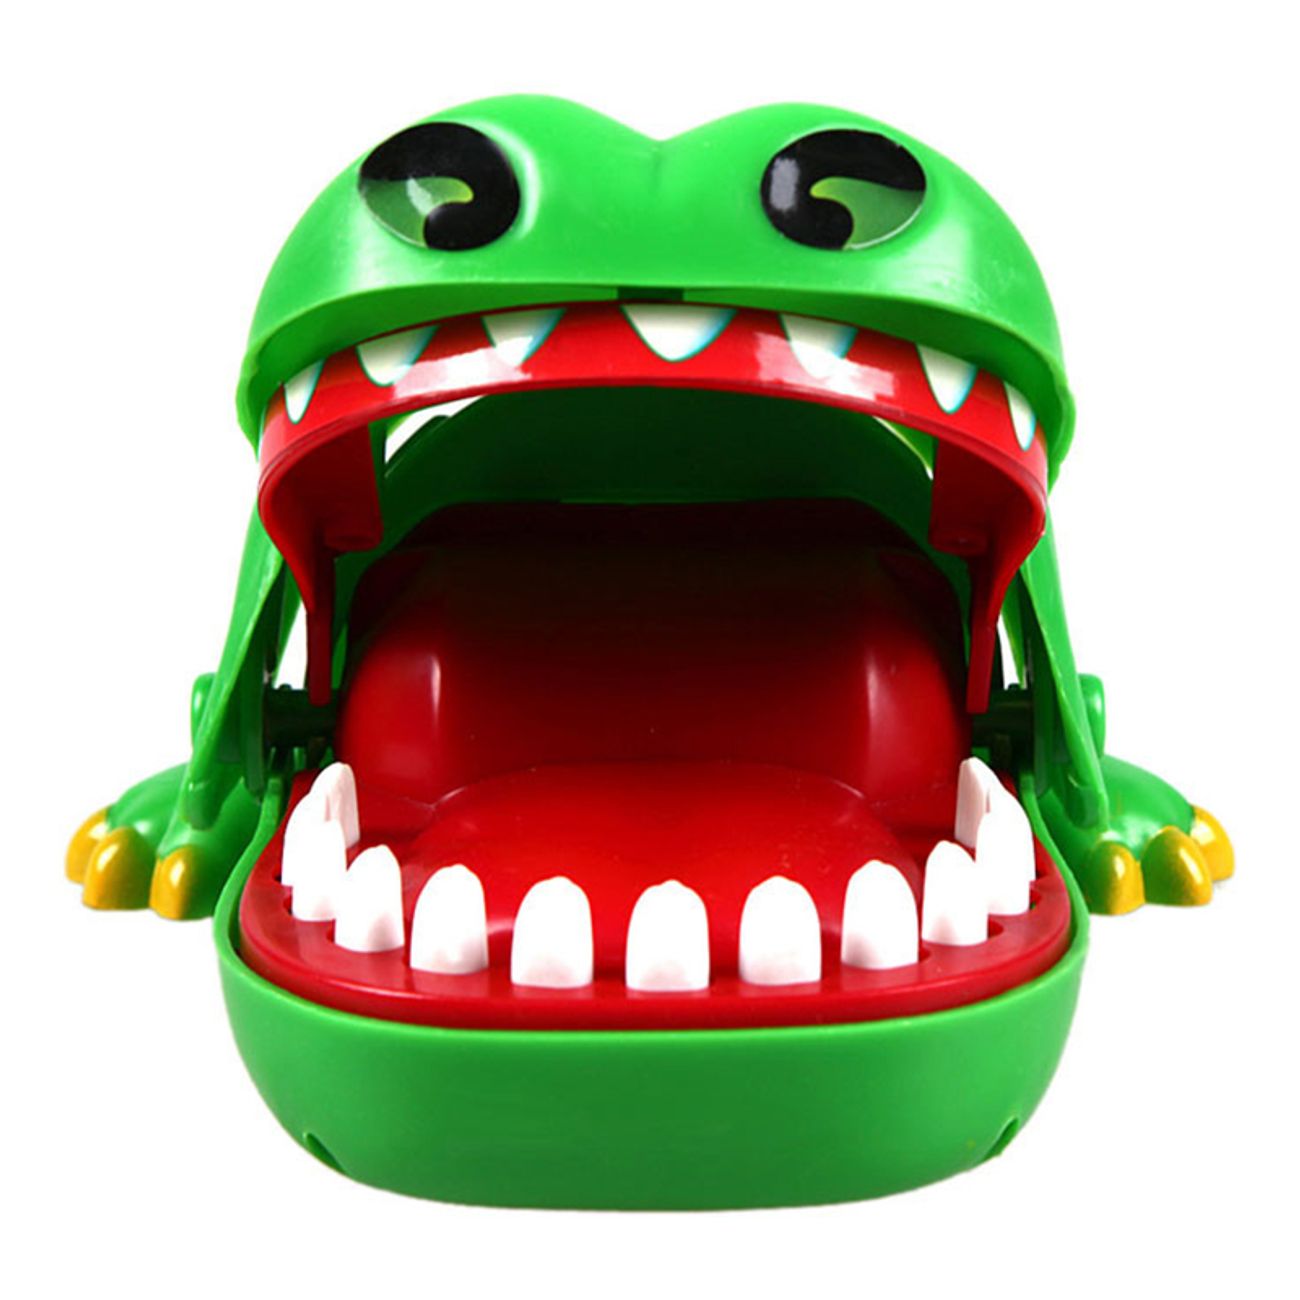 alligator-teeth-game-76955-2